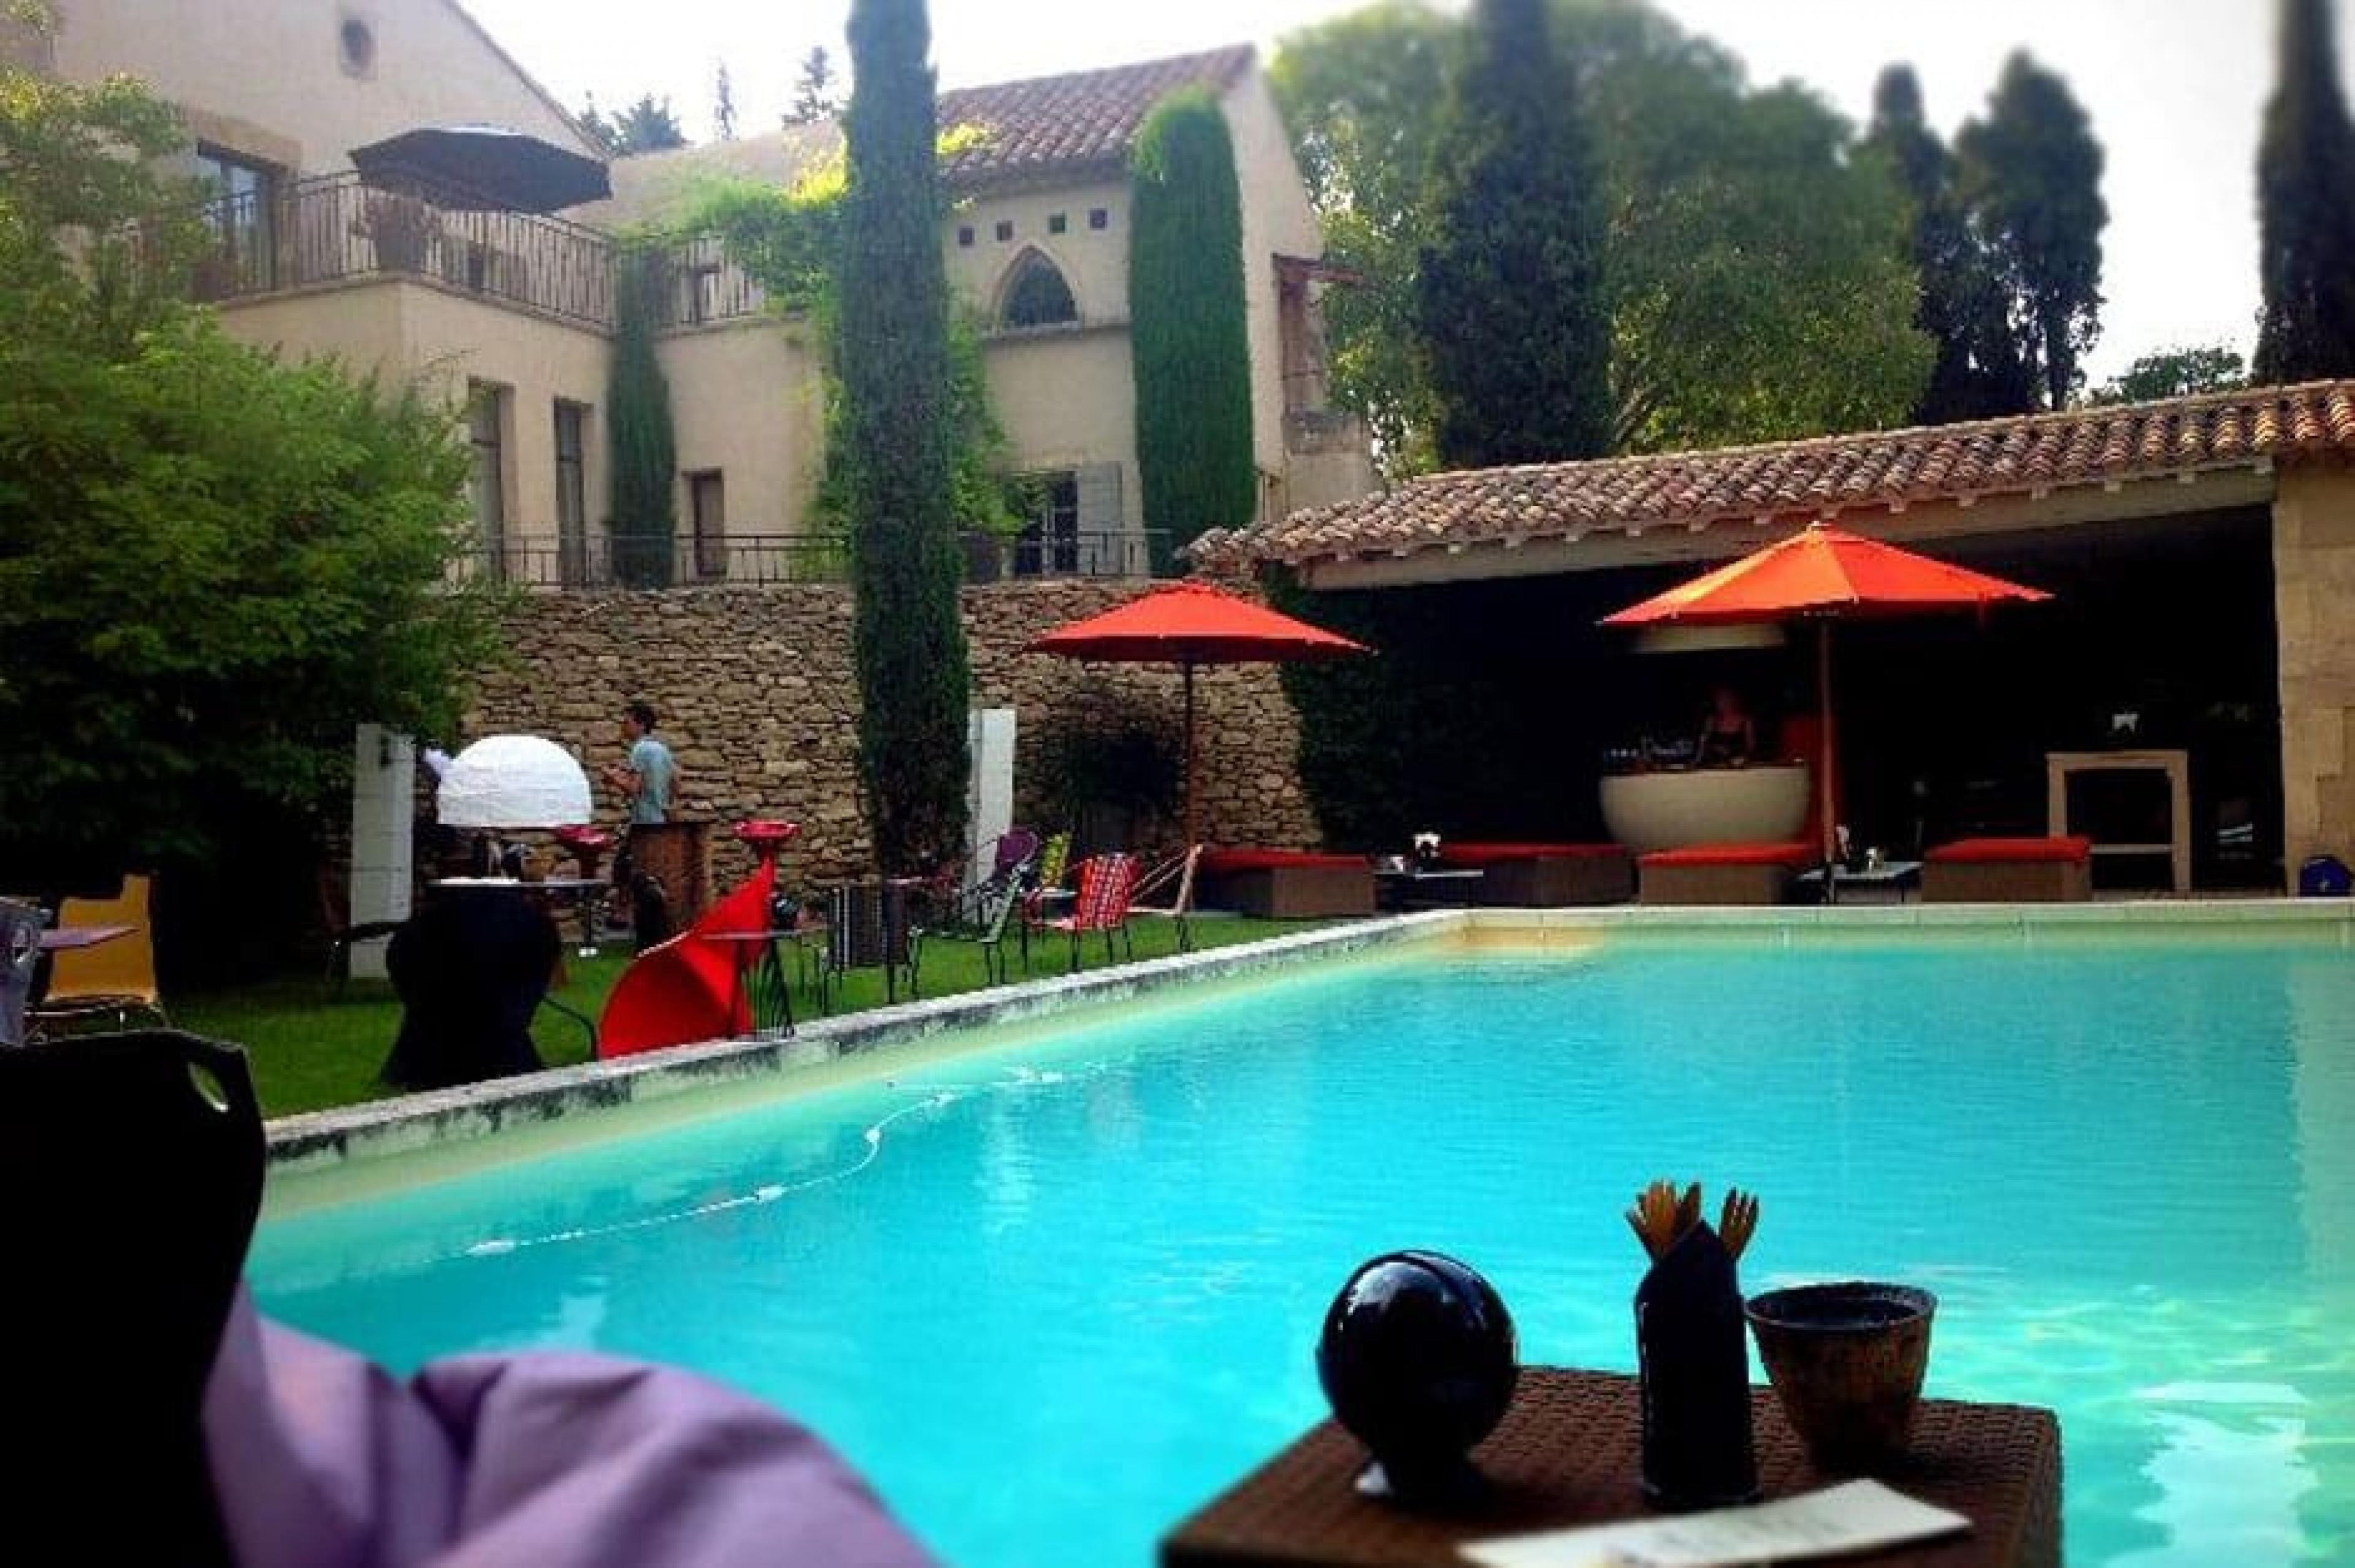 Pool Side Restaurant at Le Mas de l’Amarine, Provence, France